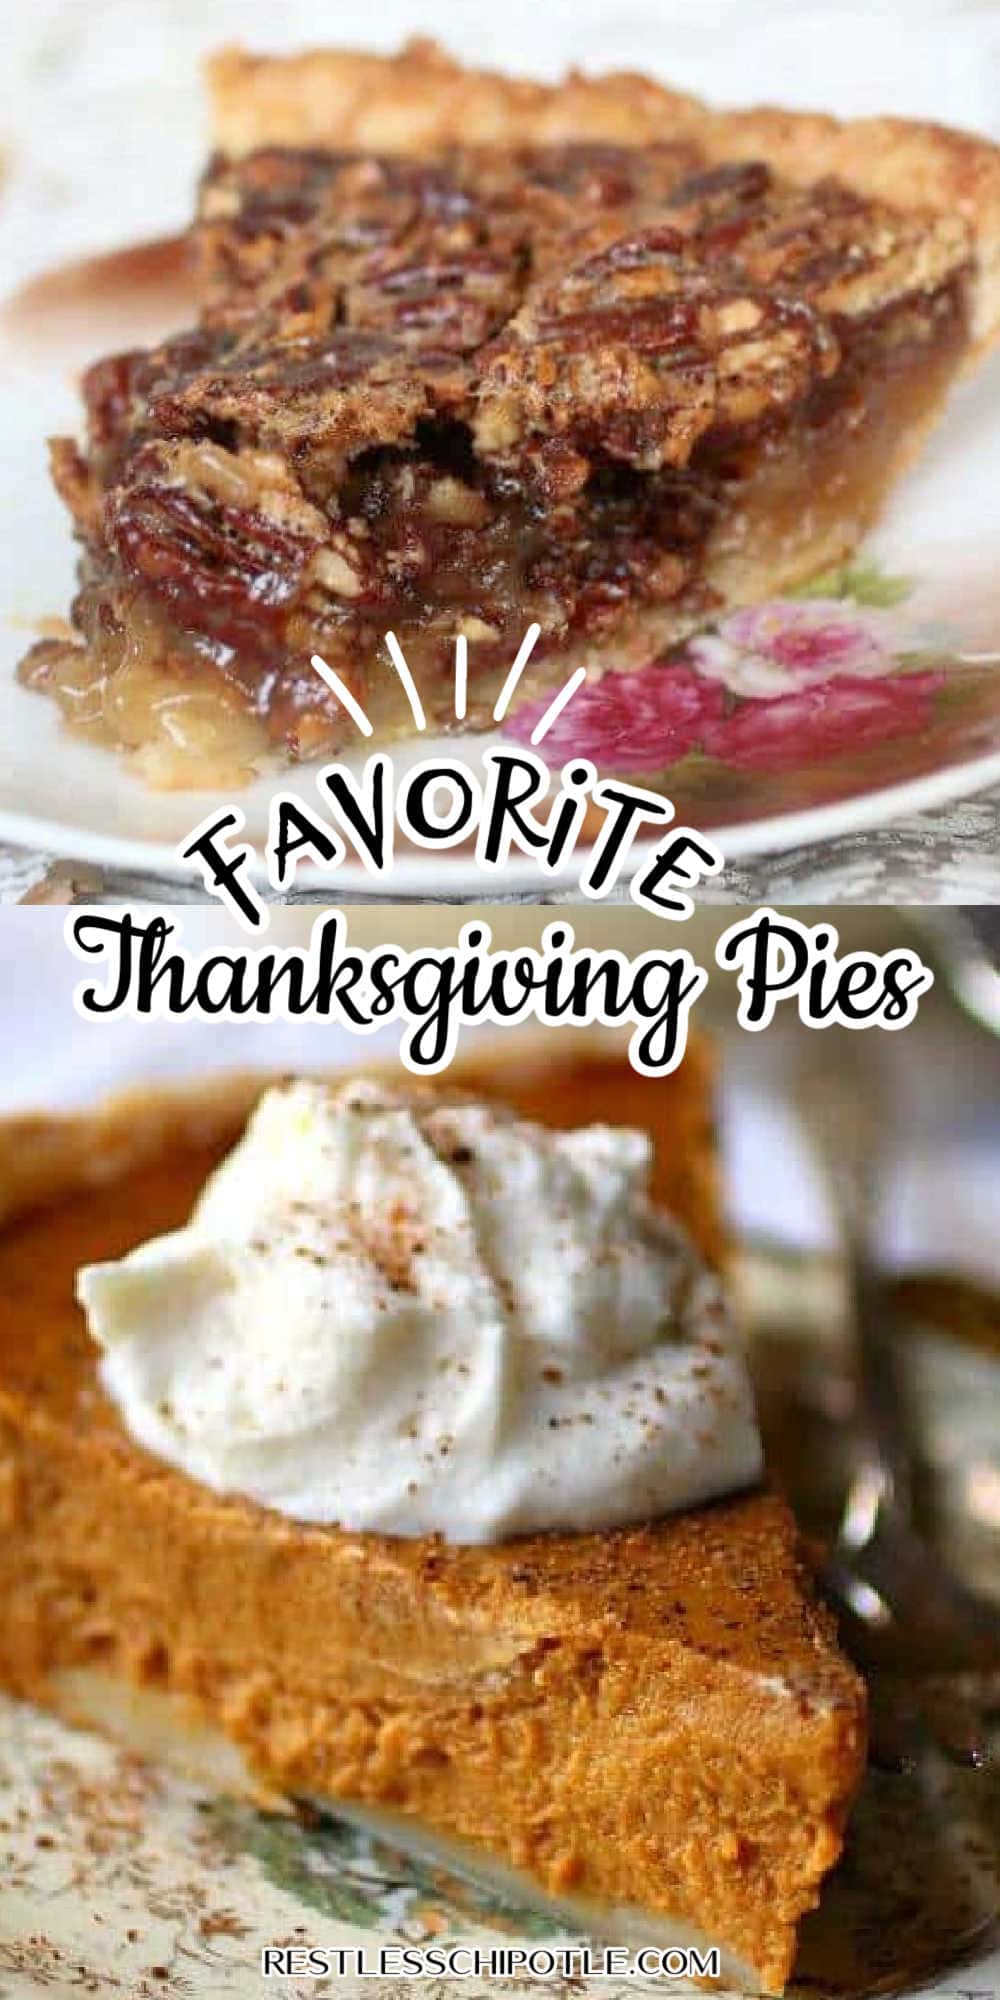 39 Best Thanksgiving Pie Recipes Plus Storage Tips - Restless Chipotle